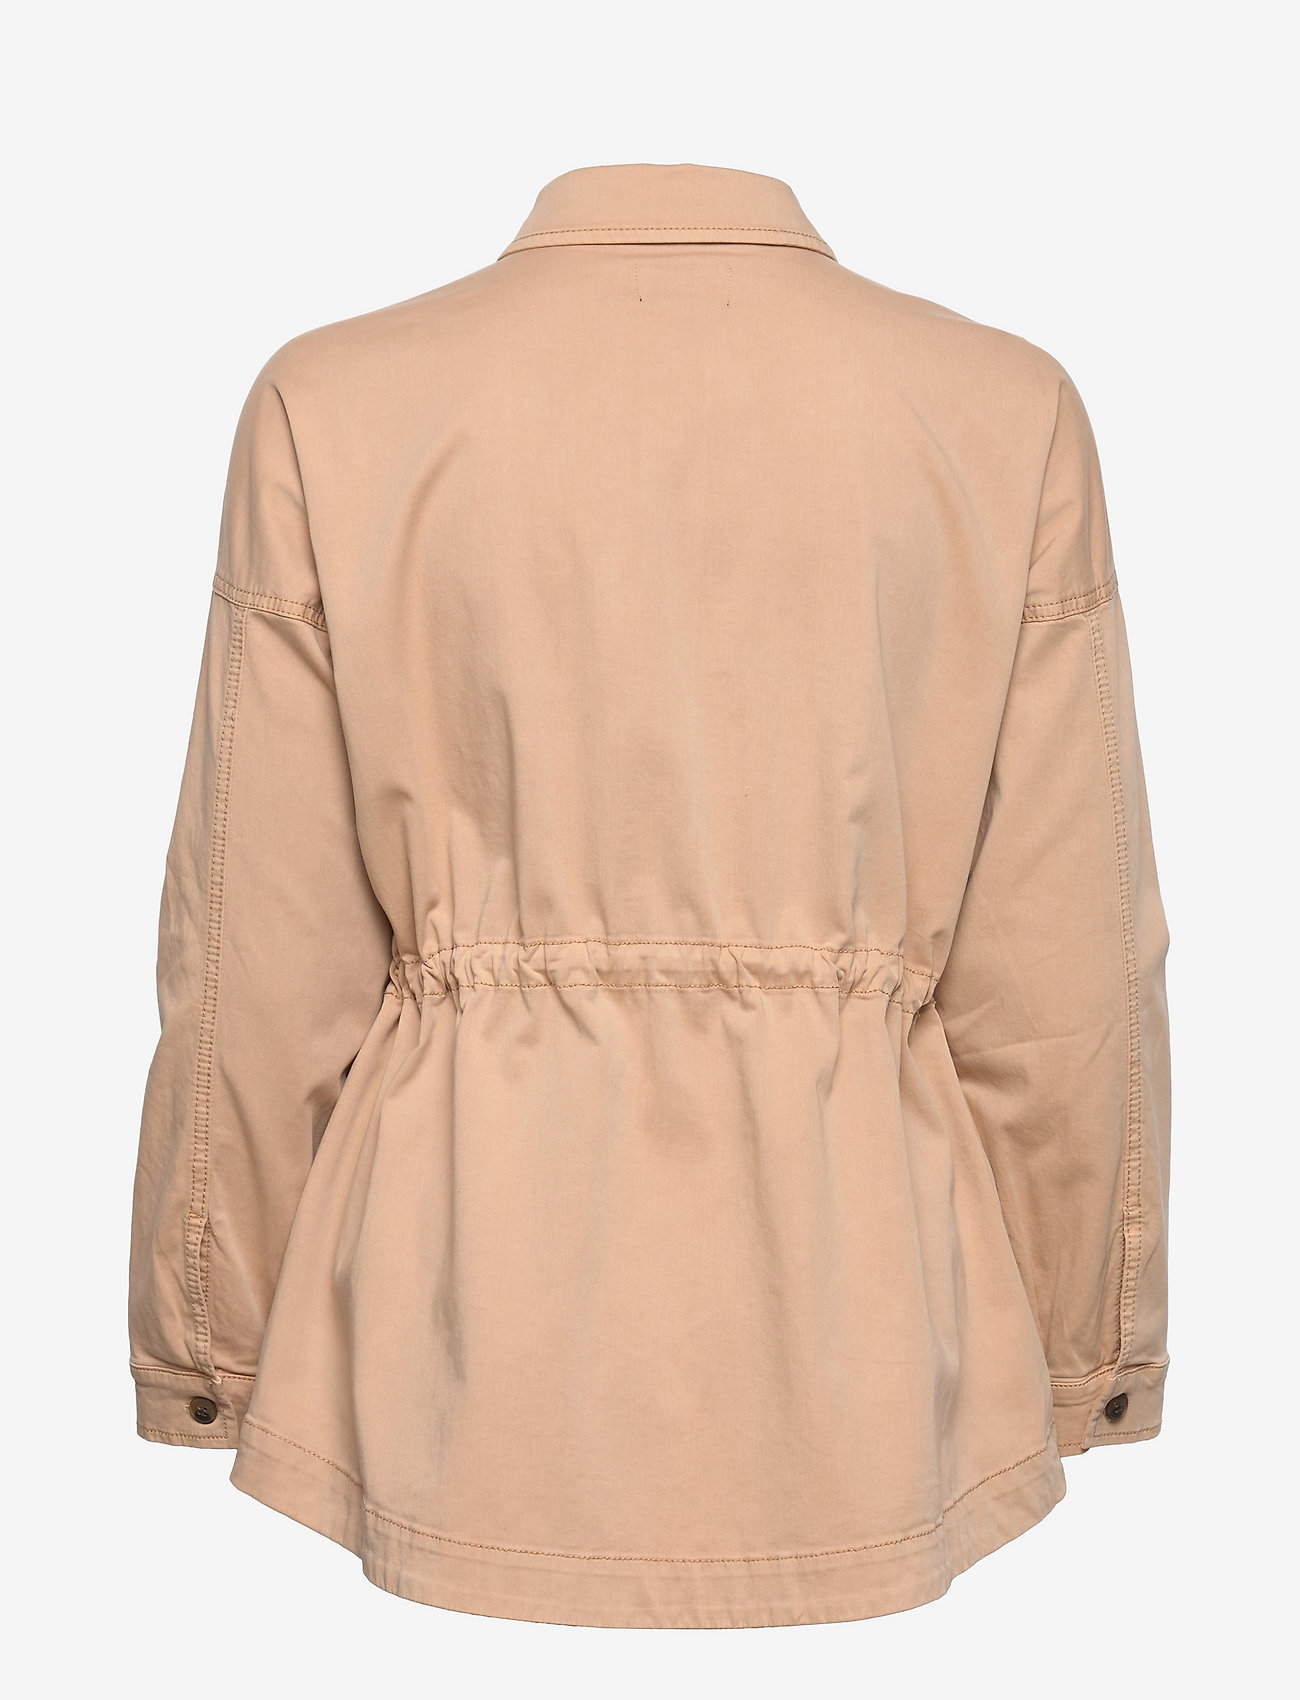 Lexington Clothing - Carly Cotton/Modal Blend Overshirt - moterims - beige - 1